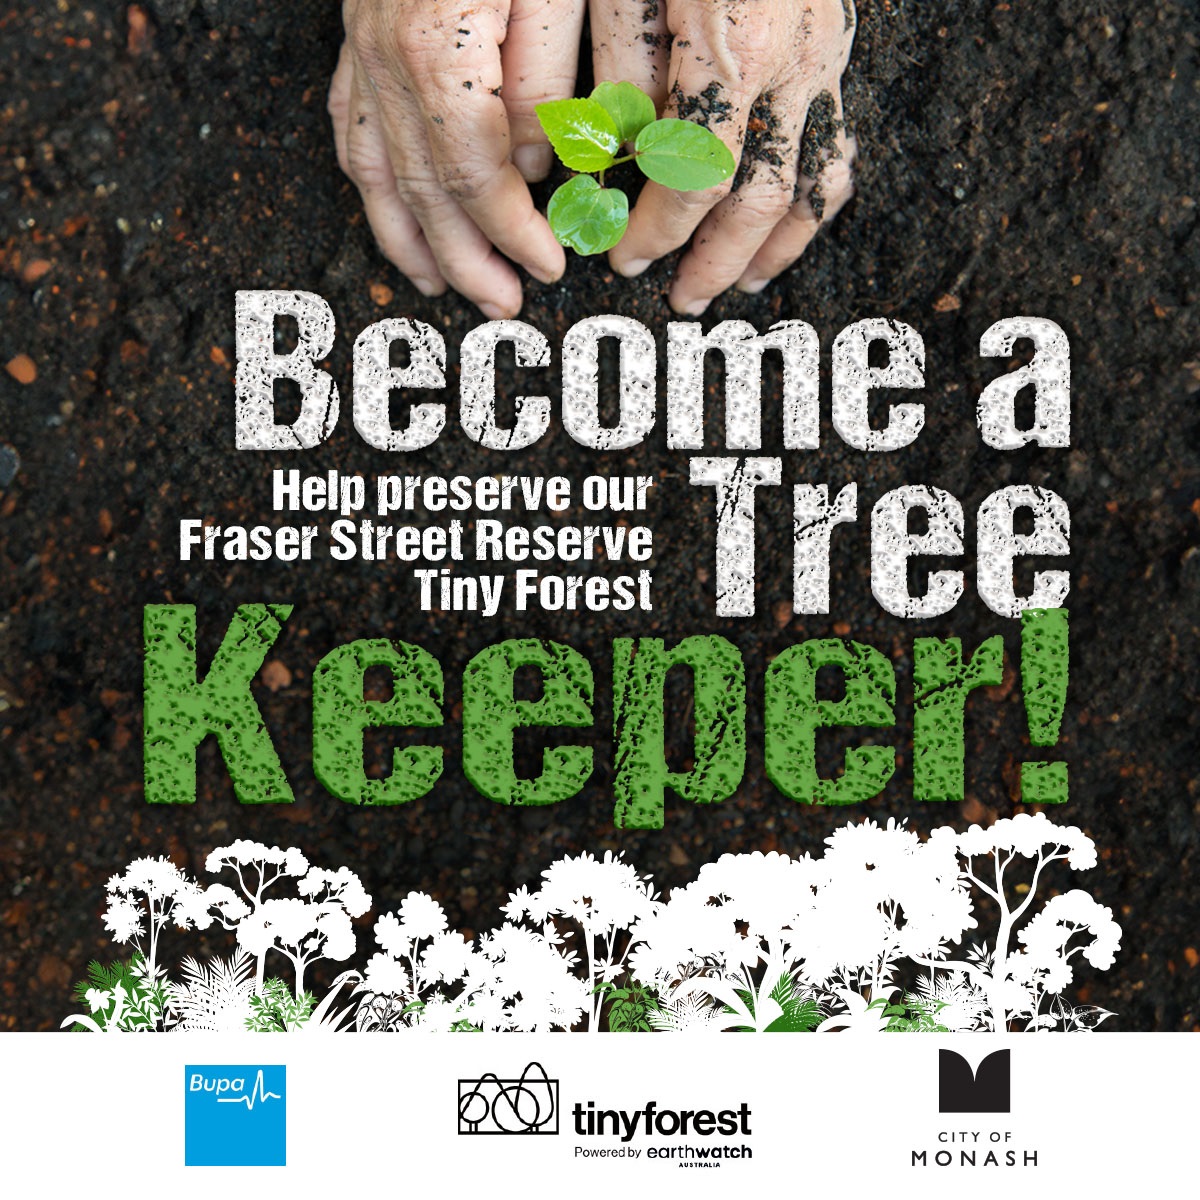 Become a tree keeper